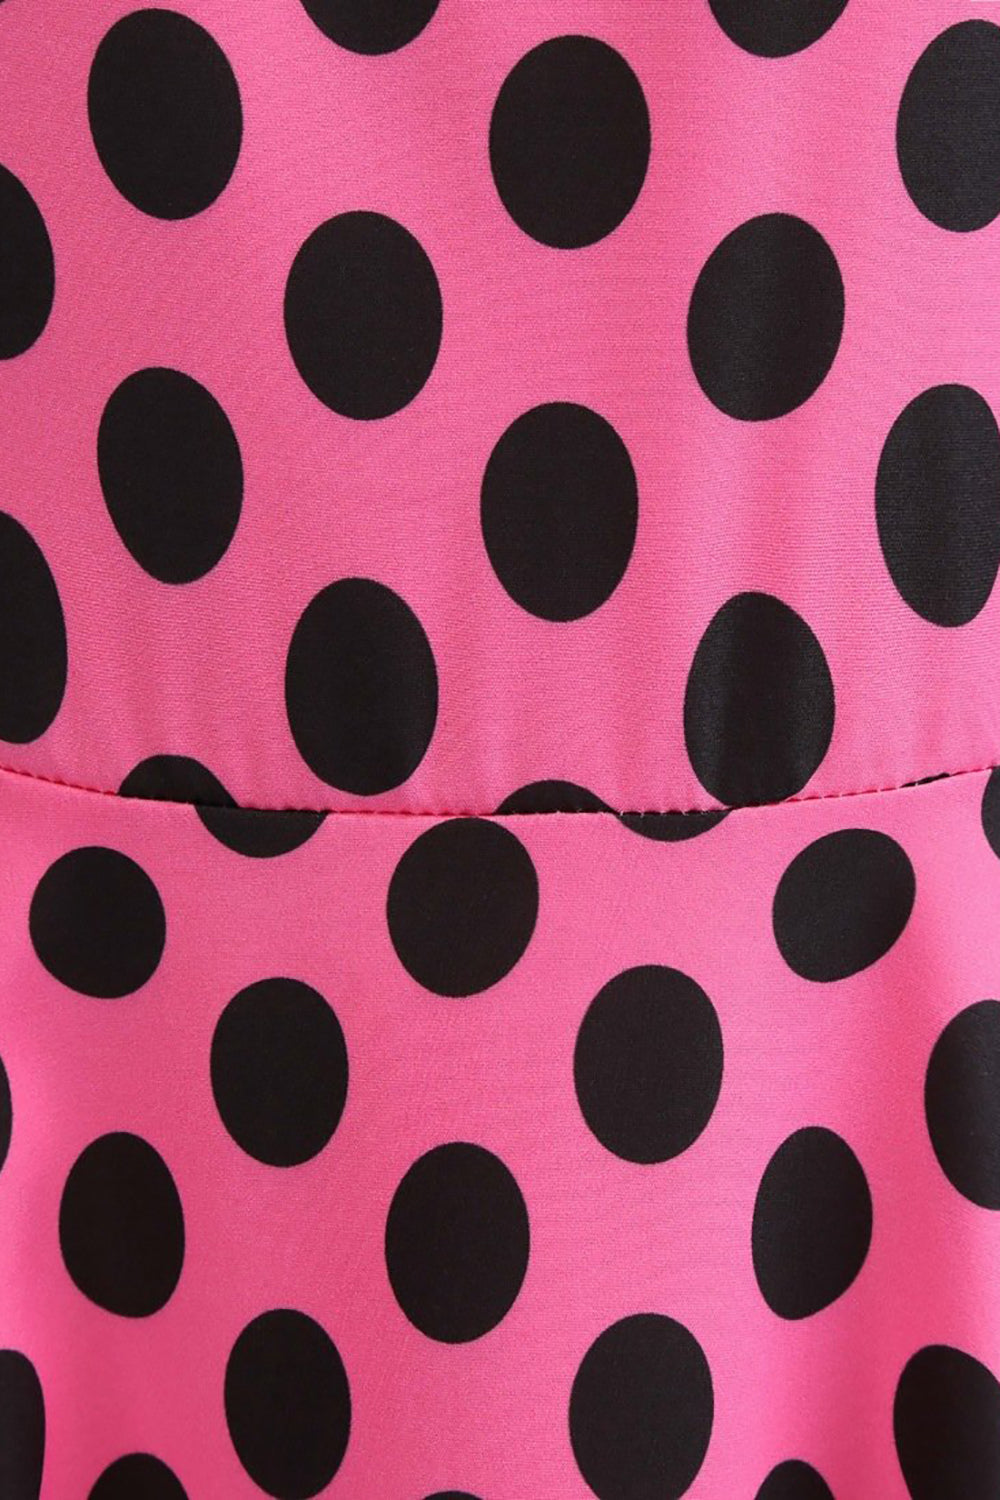 Pink Black Polka Dots Cap Sleeves 1950s Dress